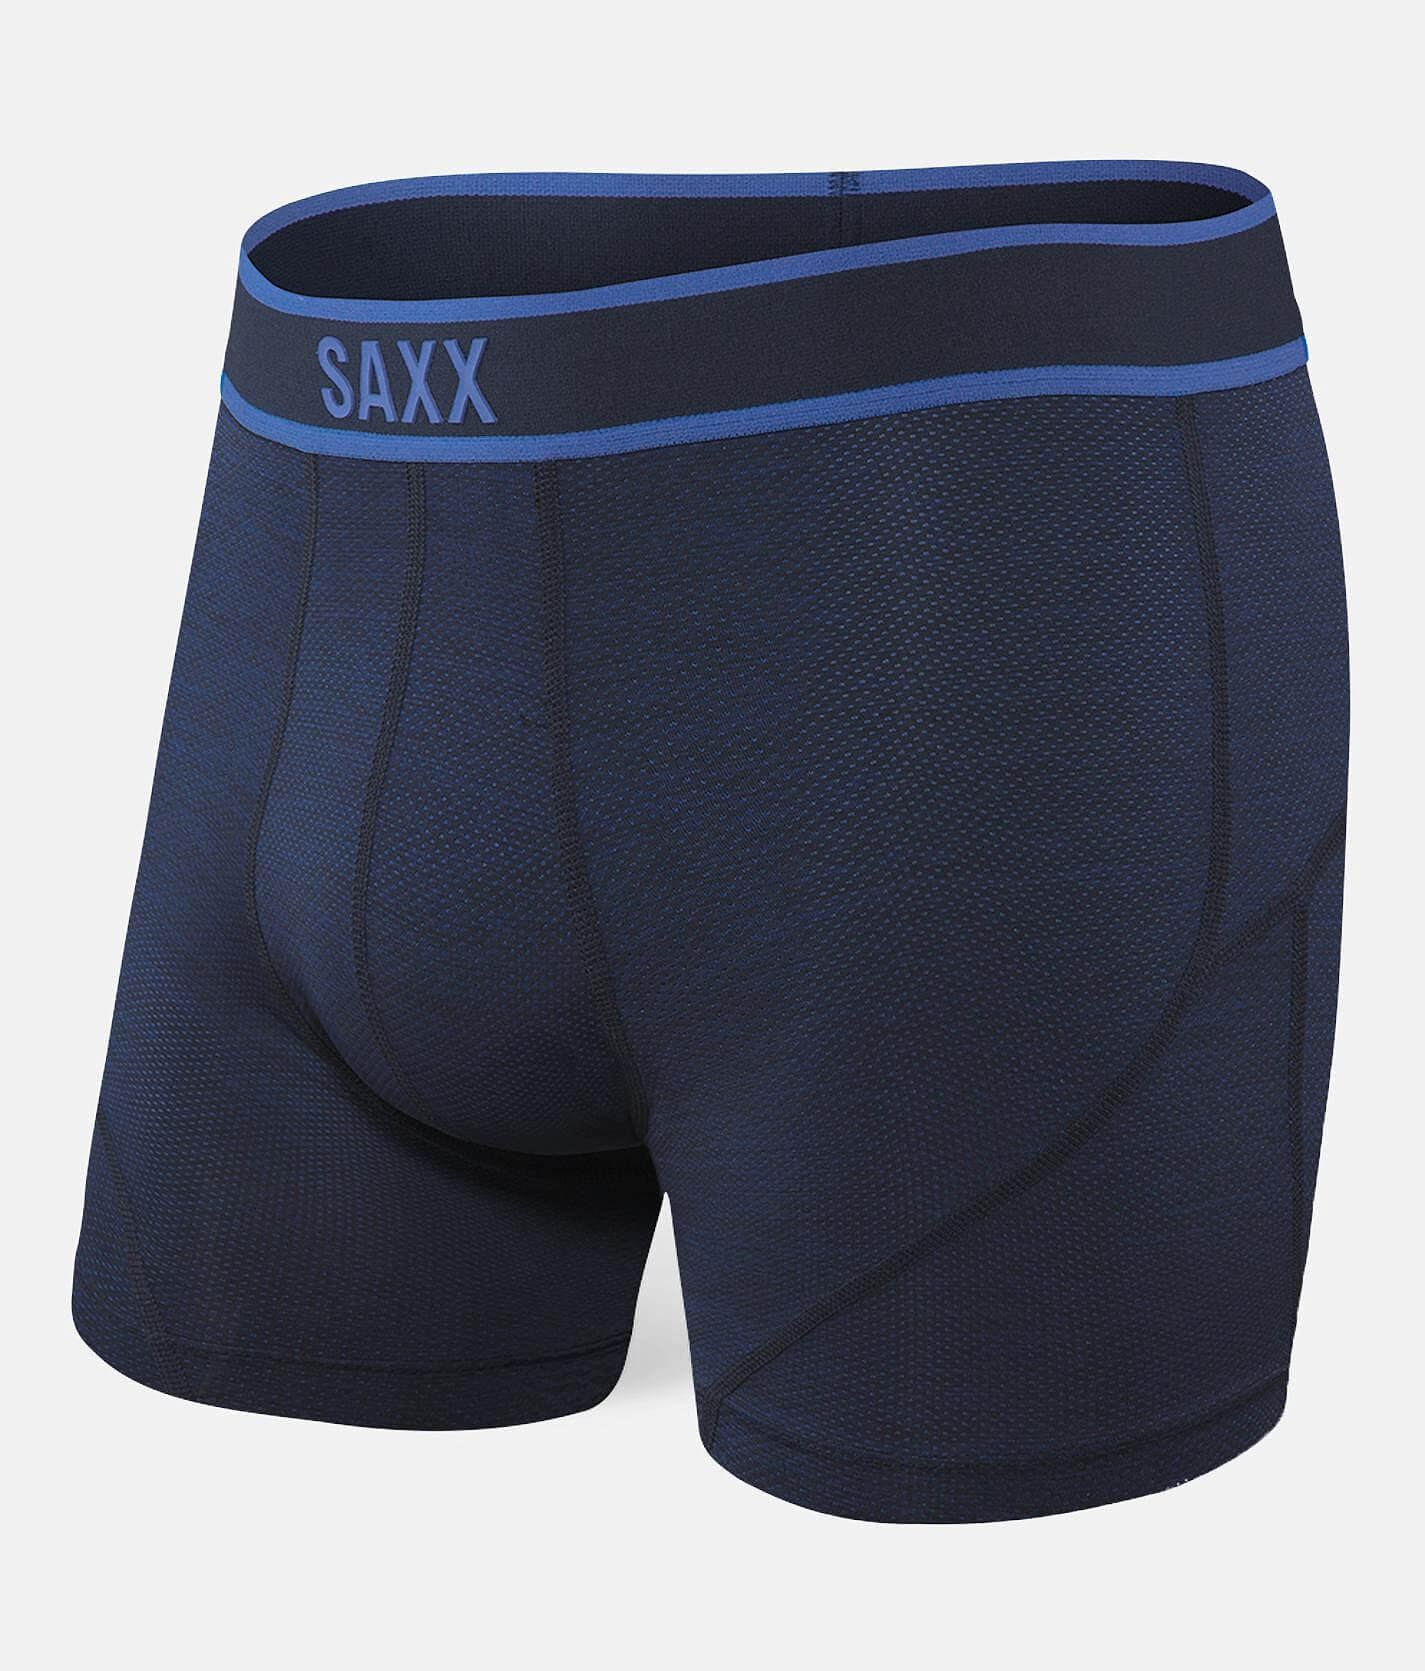 Blue Cross Dye Saxx Mens Kinetic Boxer Briefs 